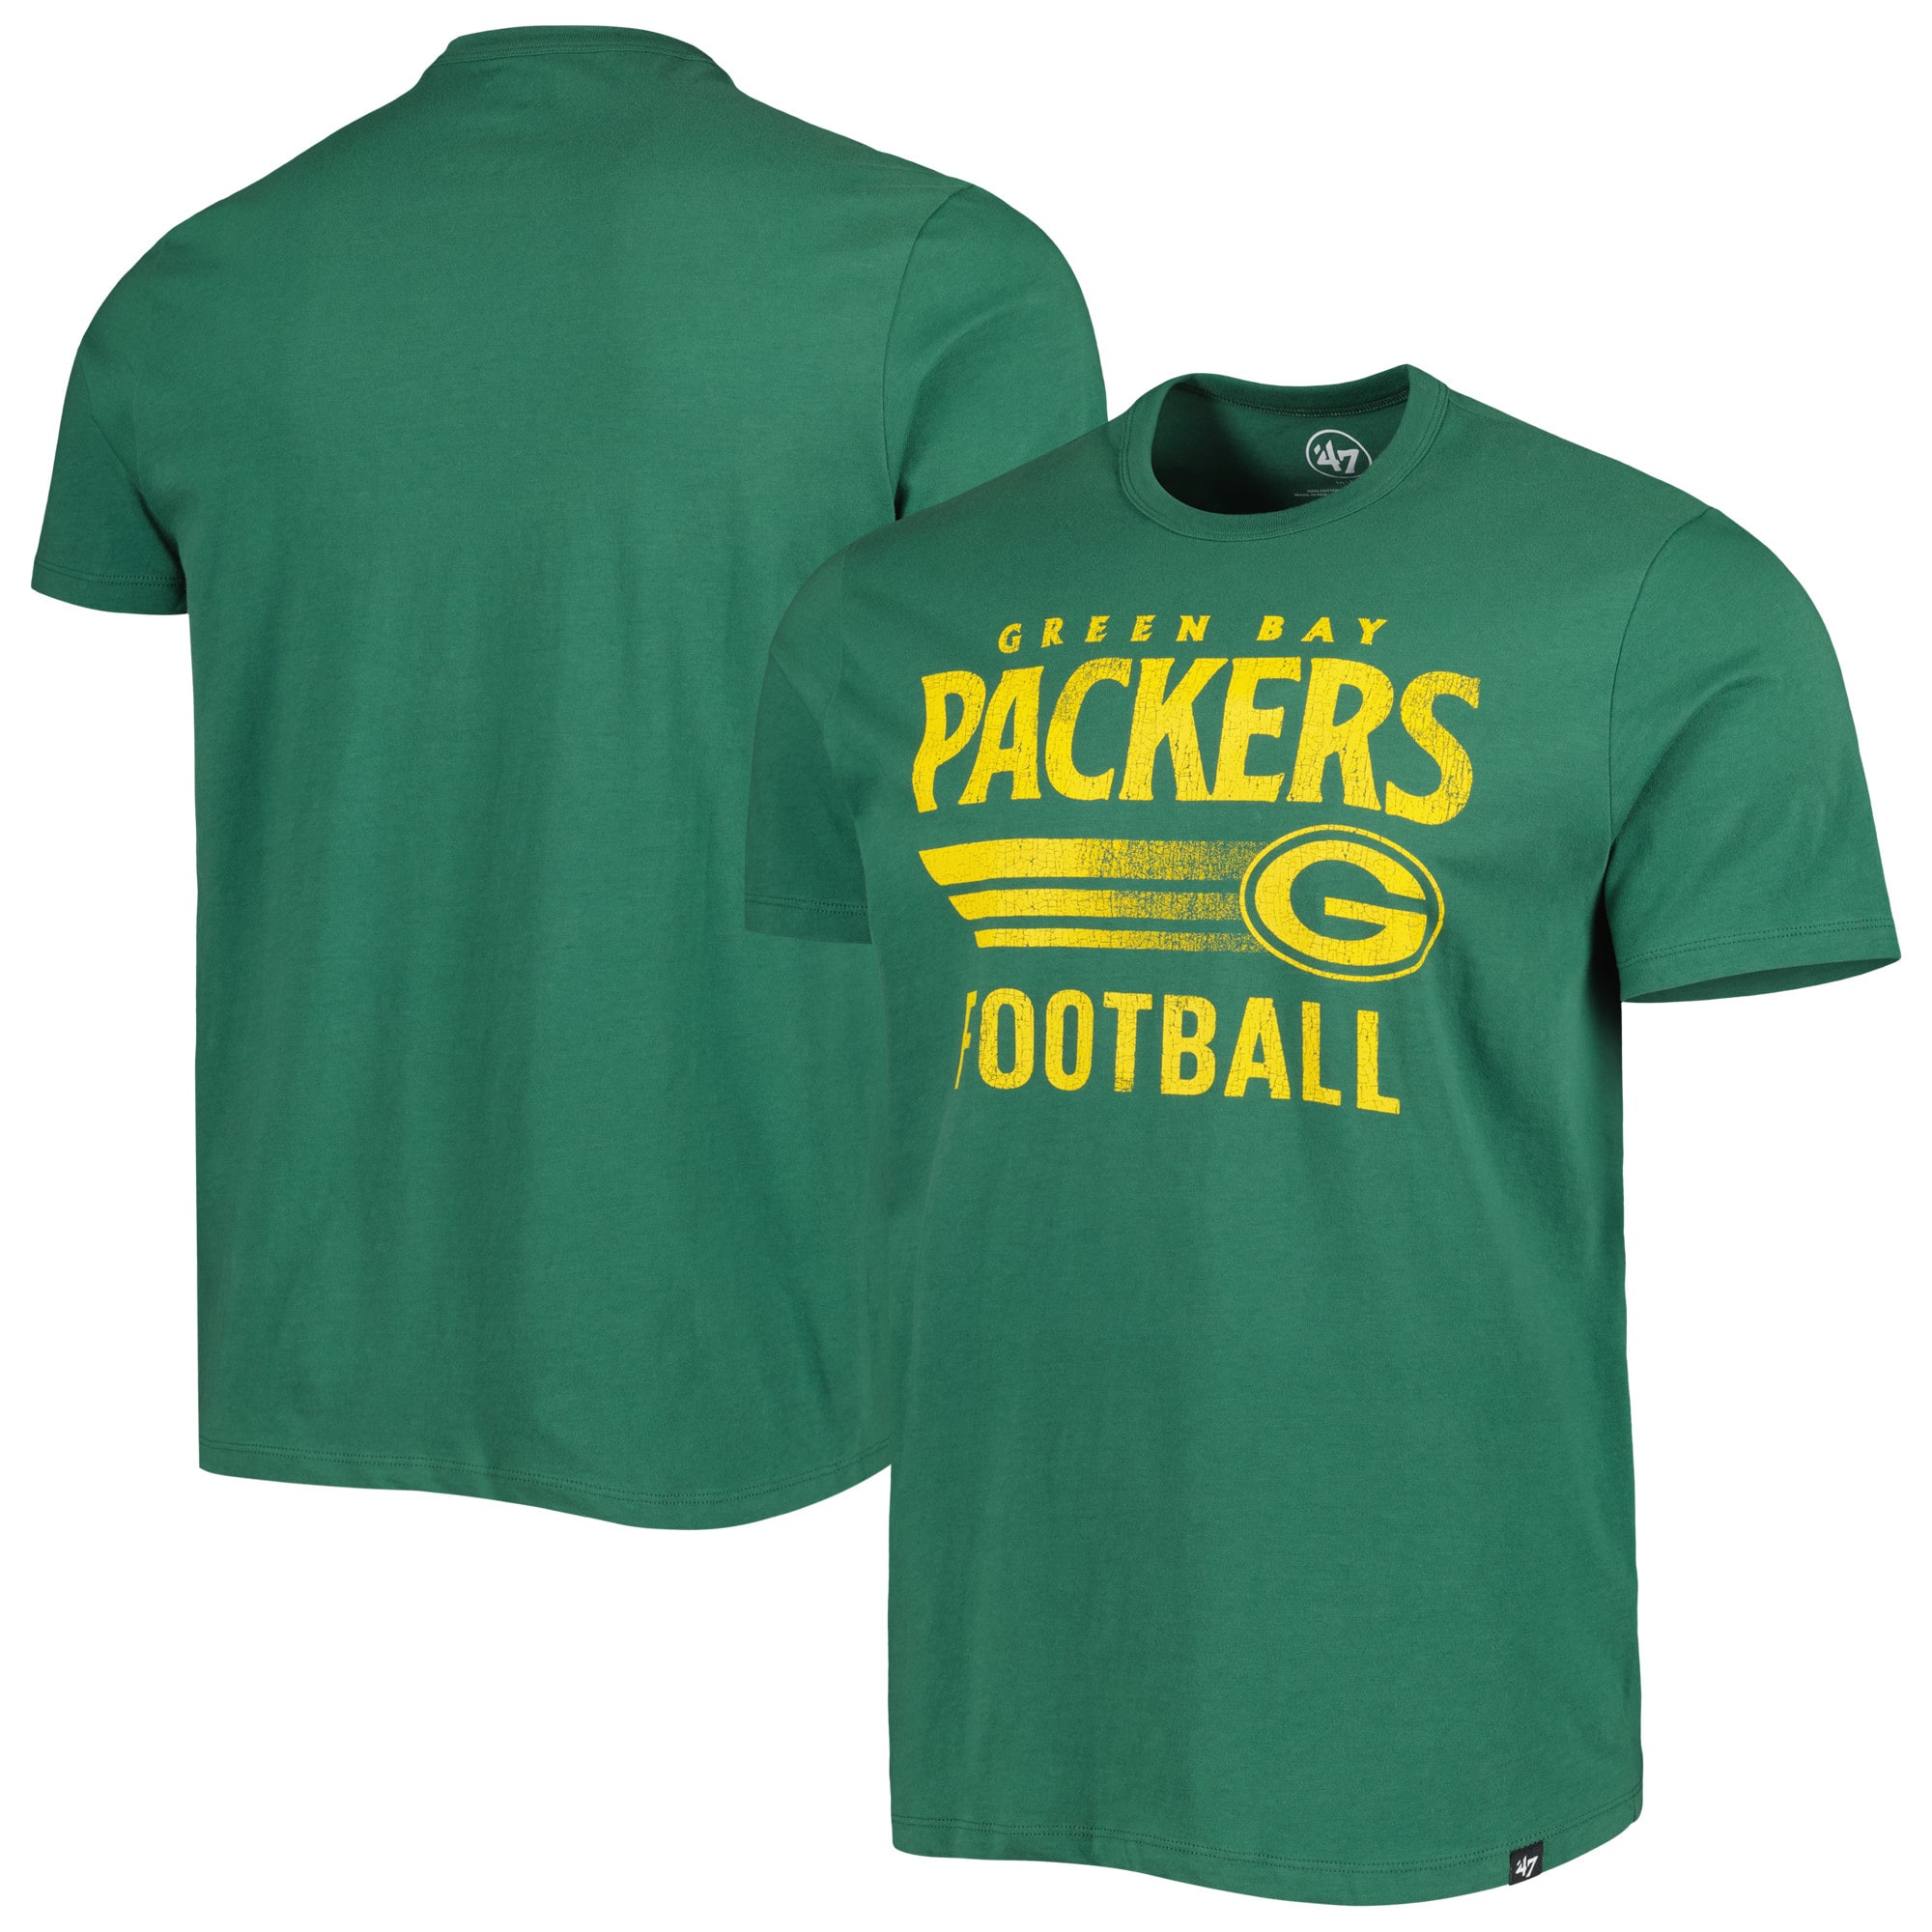 Men's '47 Green Green Bay Packers Wordmark Rider Franklin T-Shirt - image 1 of 3